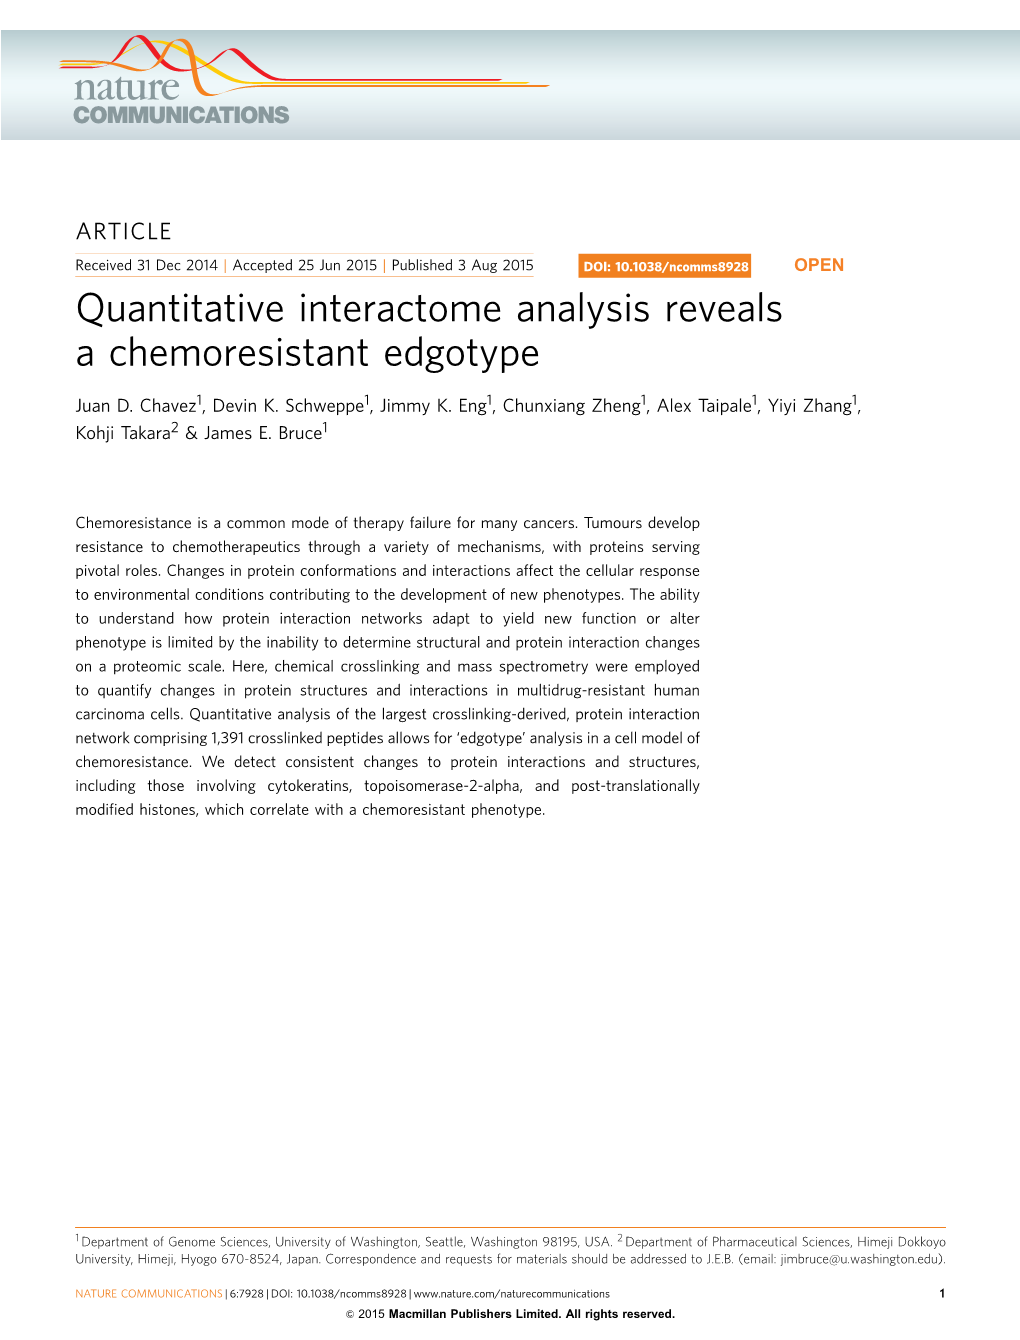 Quantitative Interactome Analysis Reveals a Chemoresistant Edgotype